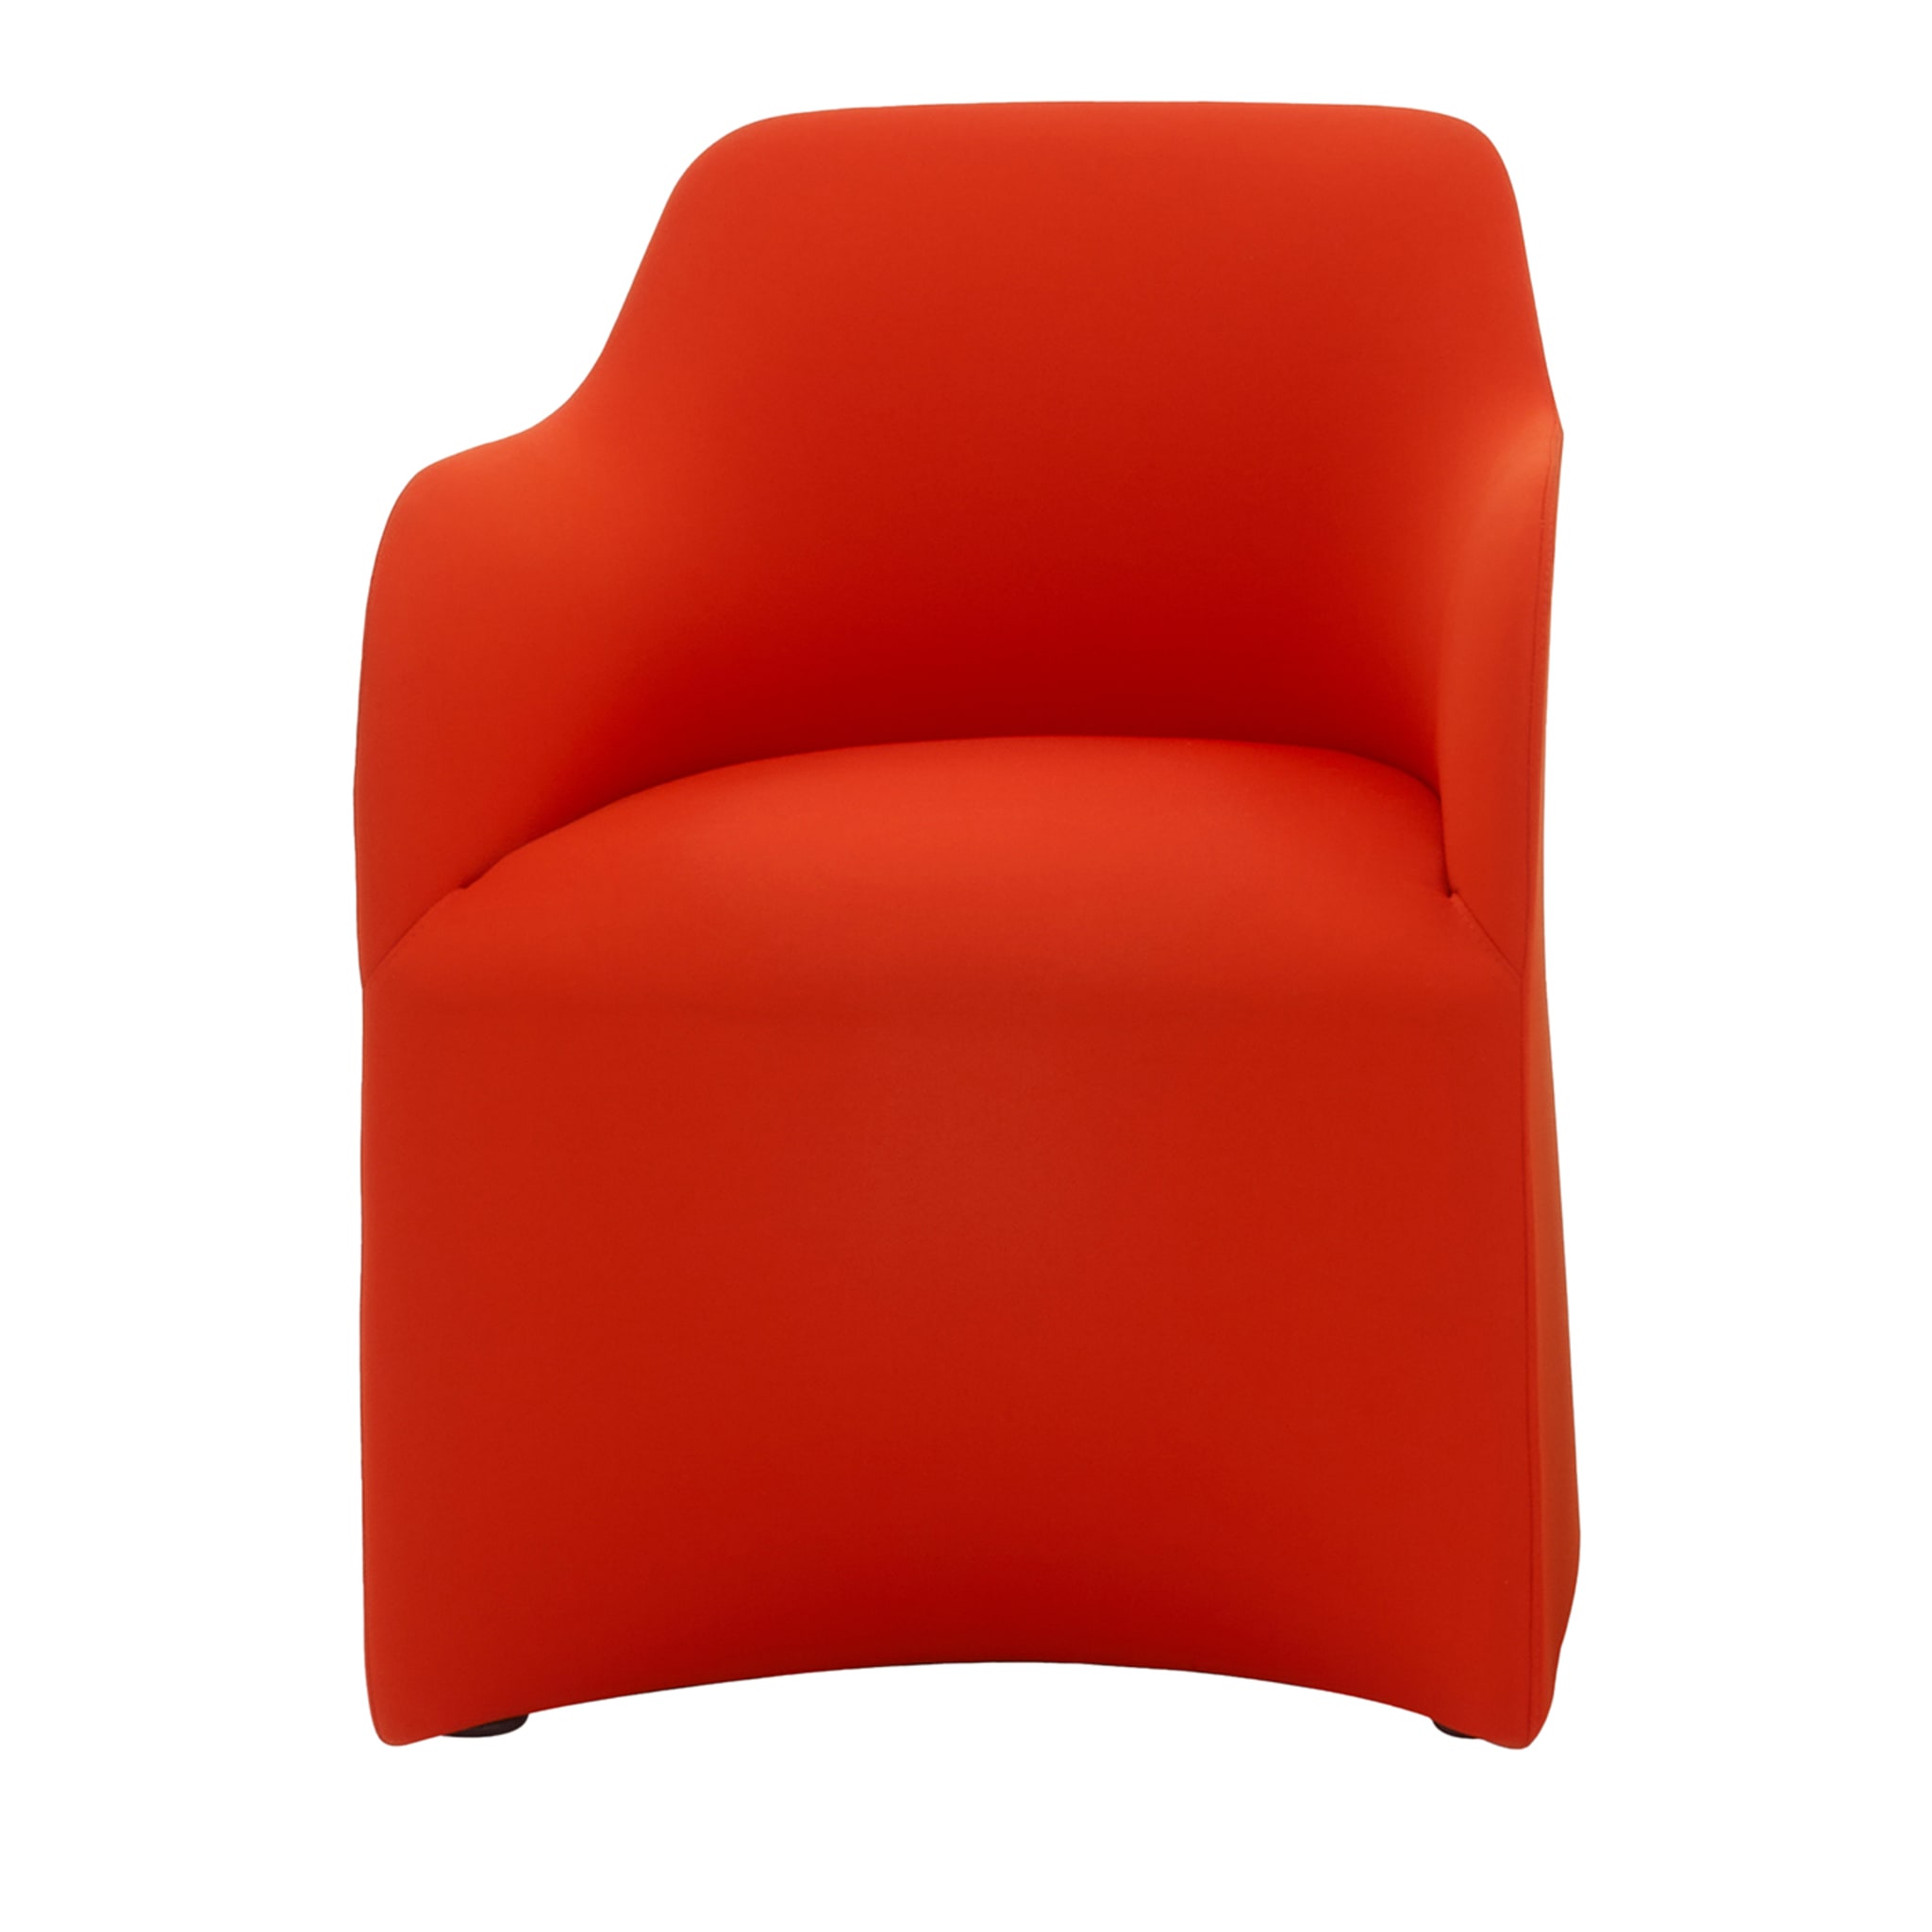 Maggy Big Red Armchair by Basaglia + Rota Nodari - Main view